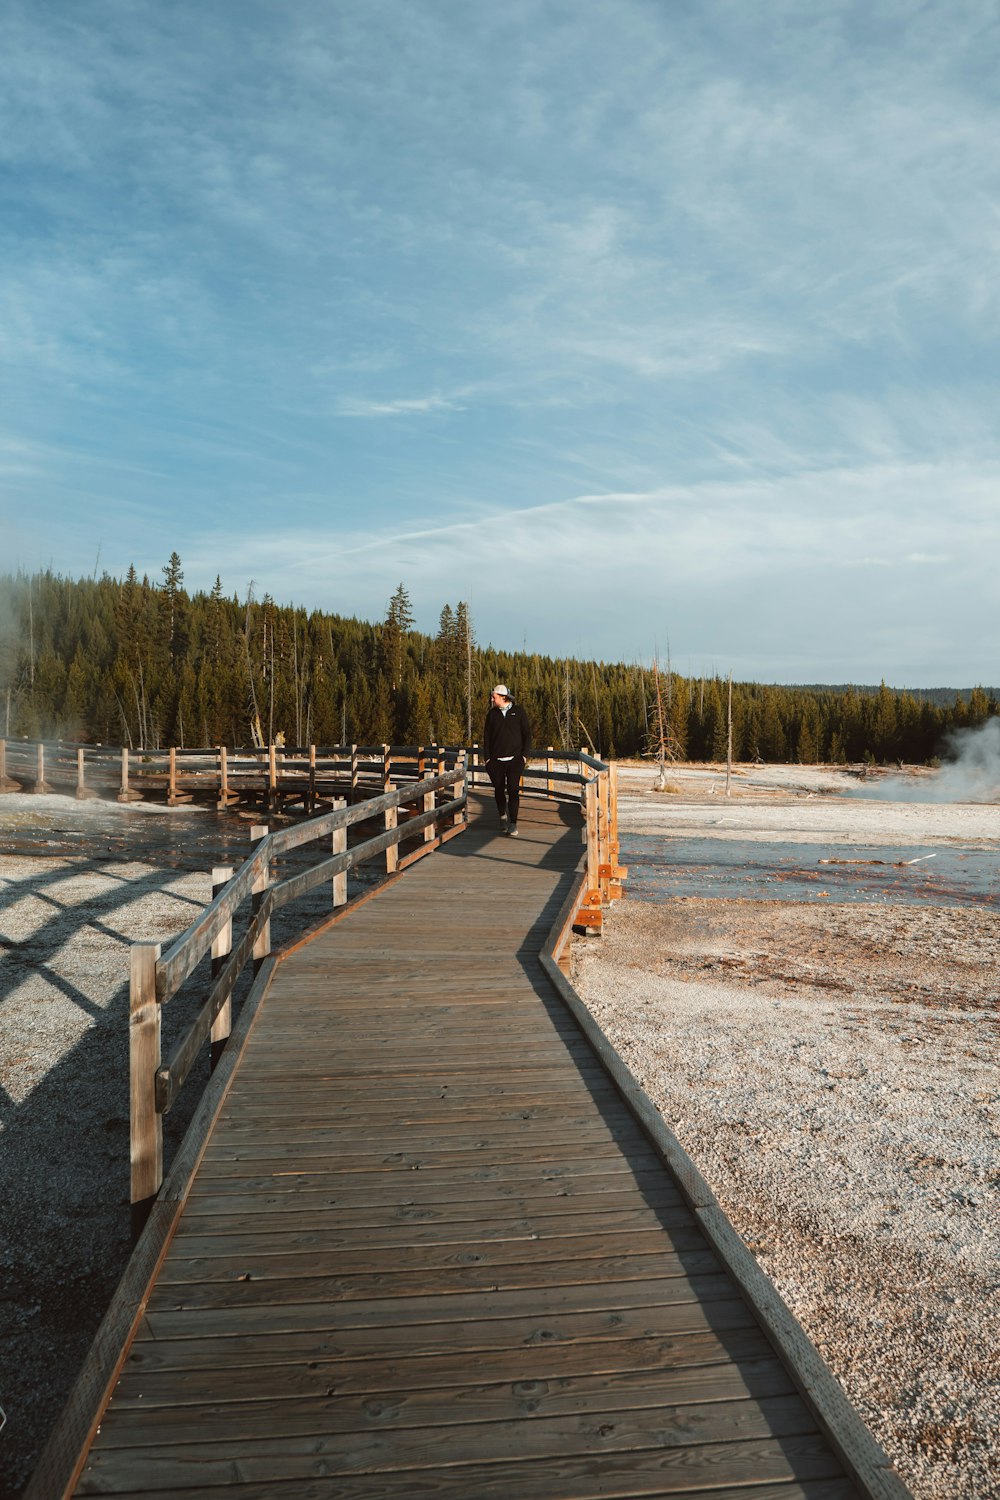 a person walking on a wooden bridge